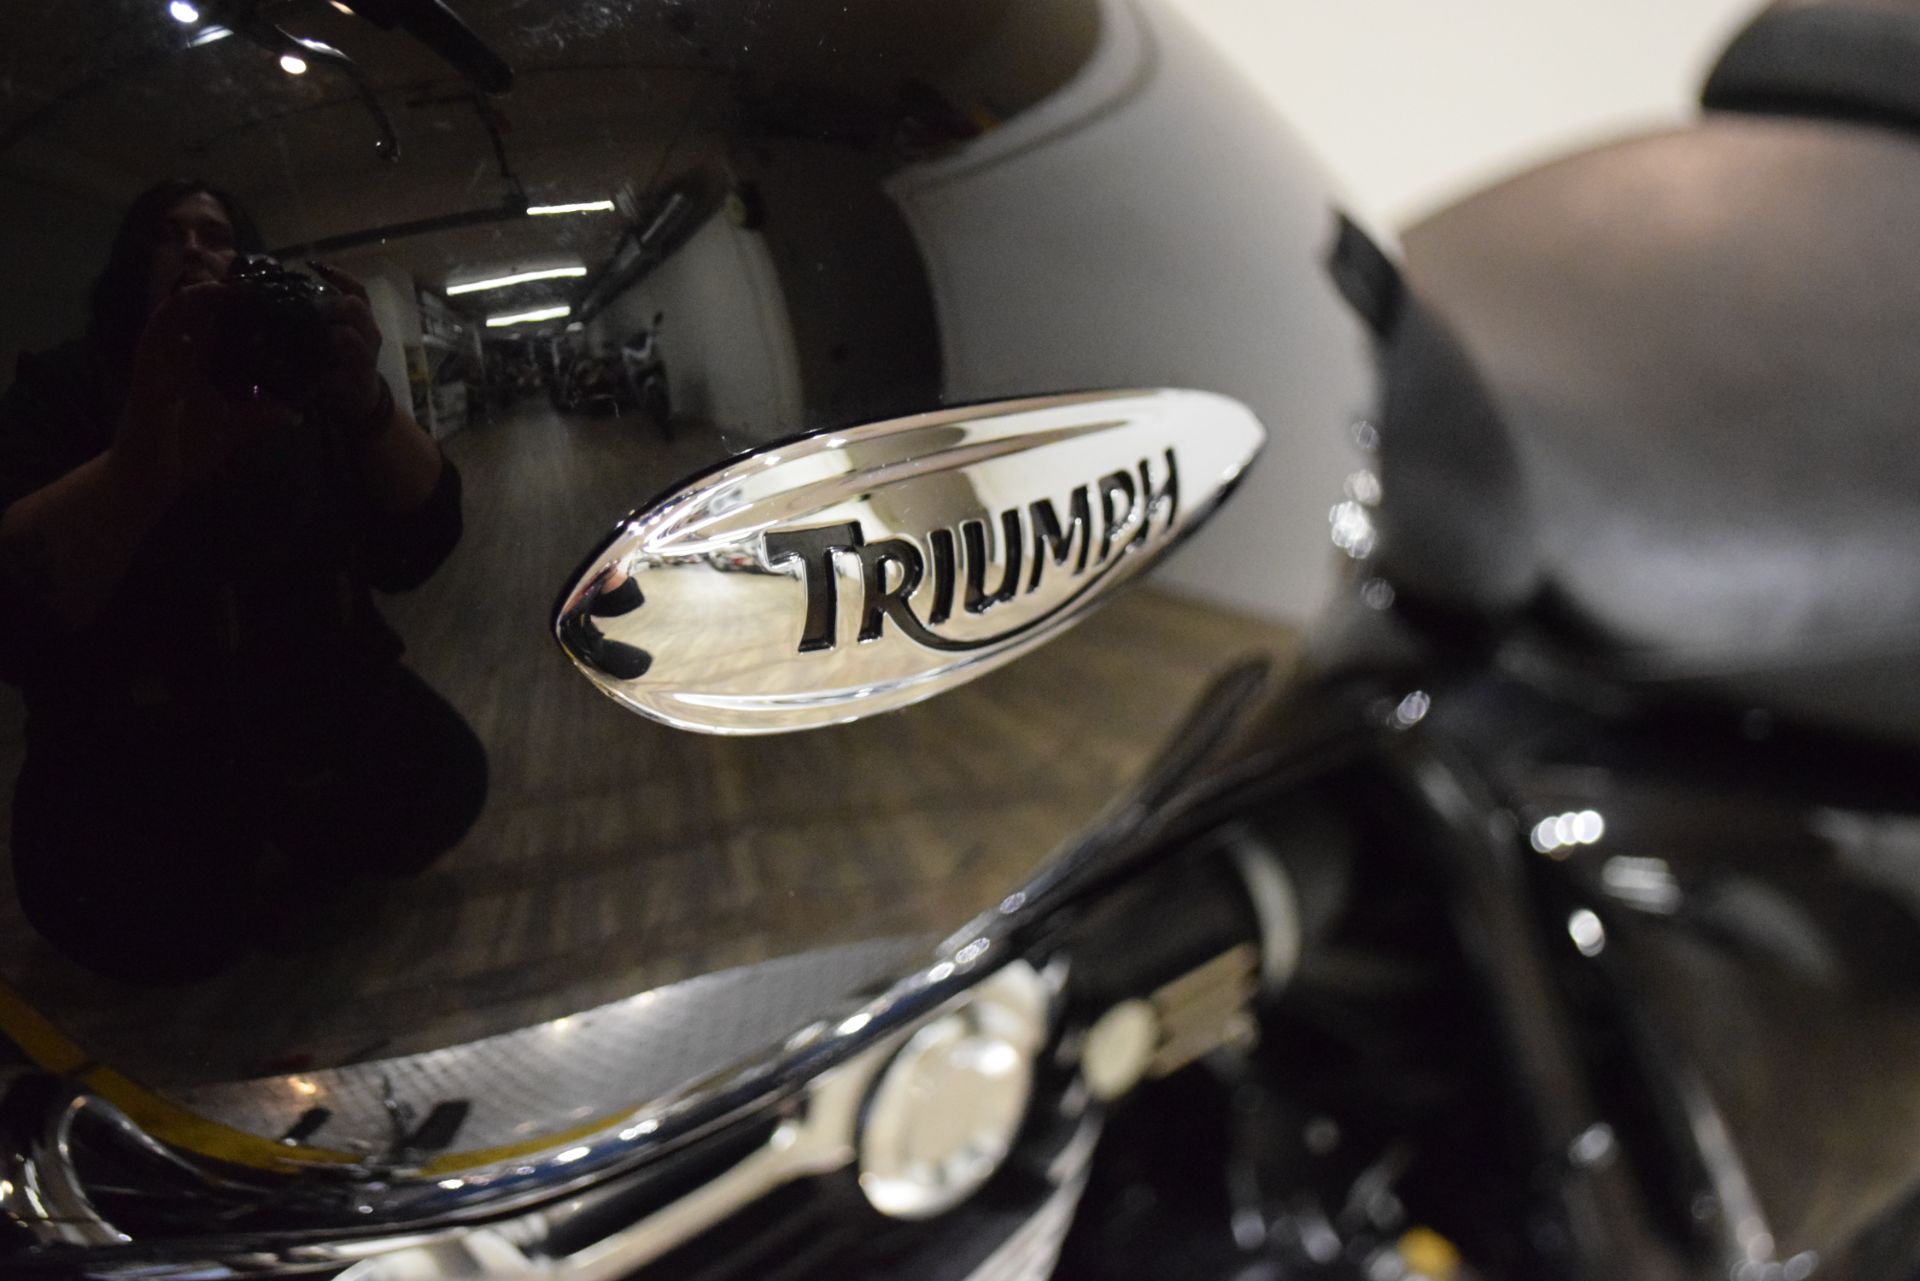 2010 Triumph Thunderbird Used Motorcycle for Sale Wauconda Illinois